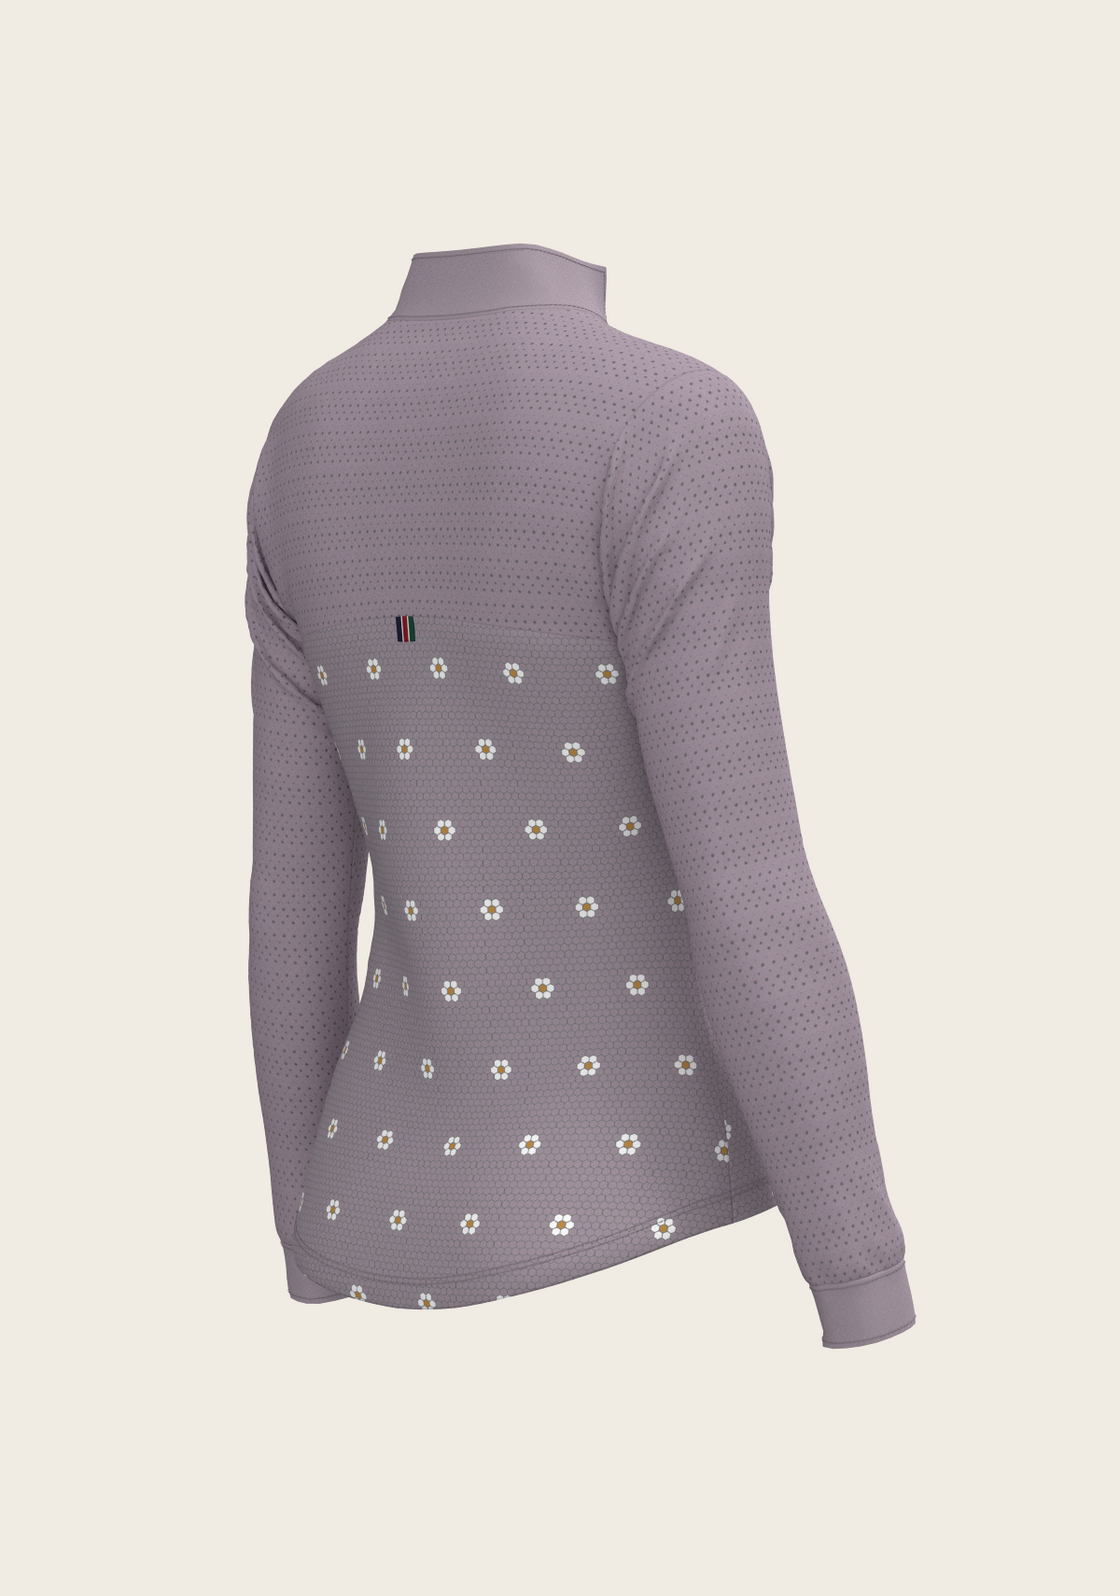 Mosaic Daises in Lavender Long Sleeve Sport Sun Shirt